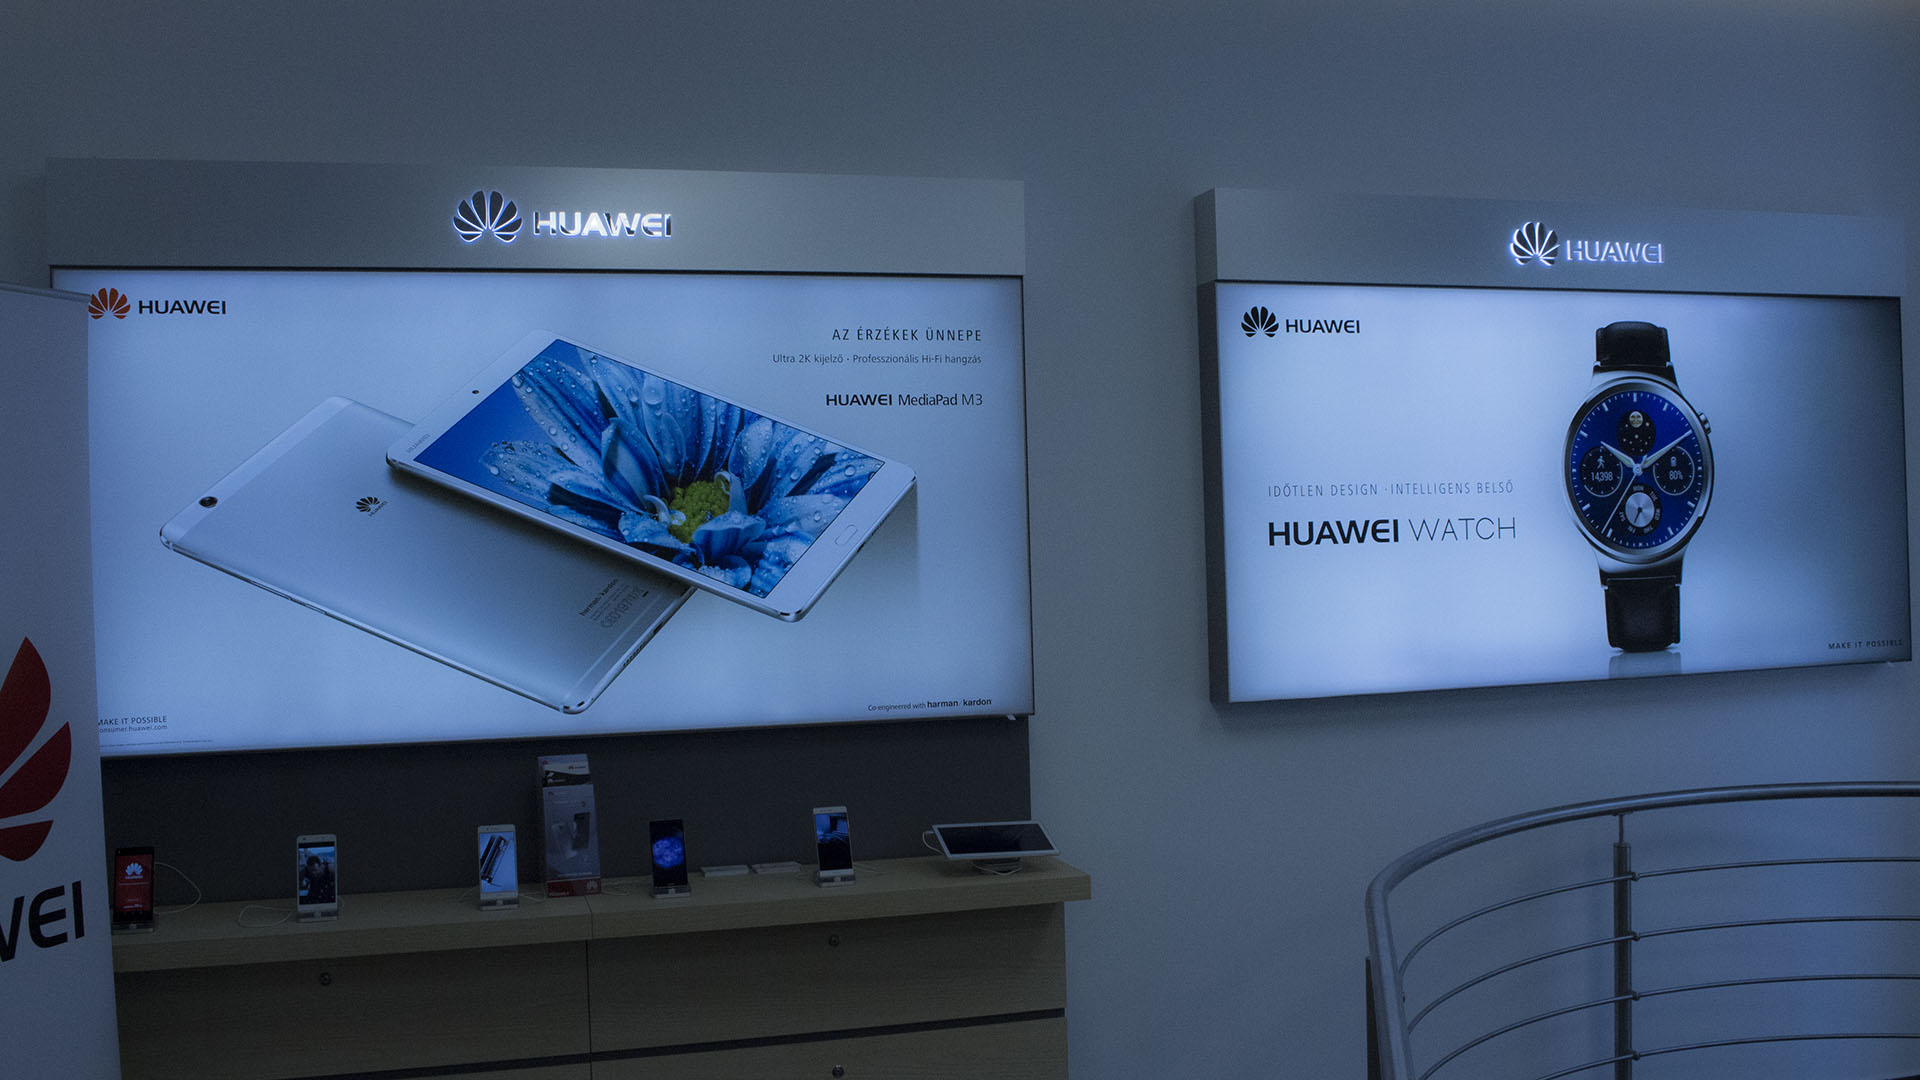 Huawei Customer Service Center